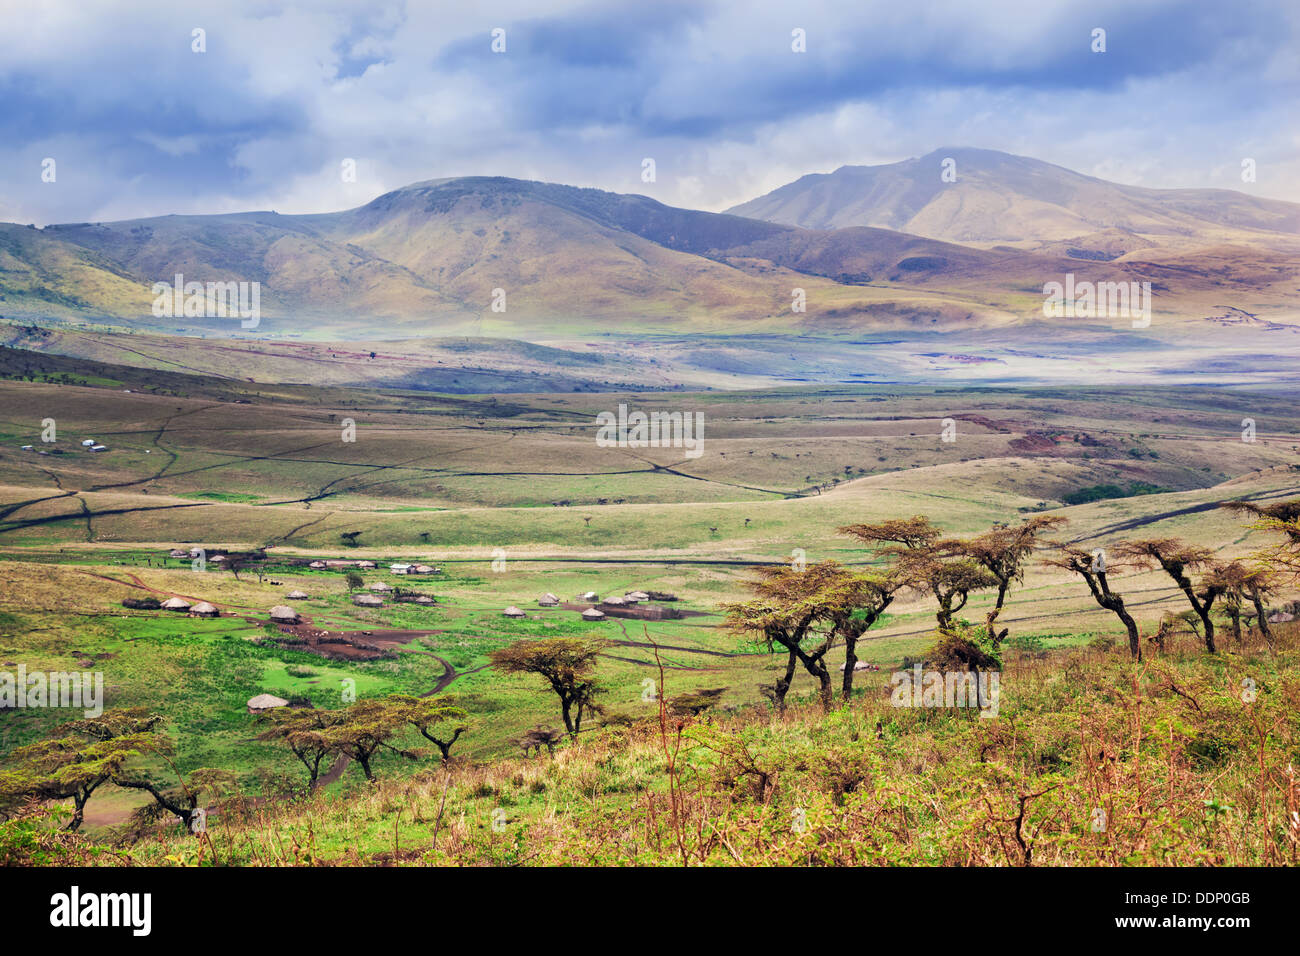 Landschaft, Afrika - Savanne in Tansania, Afrika. Maasai-Häuser im Tal Stockfoto